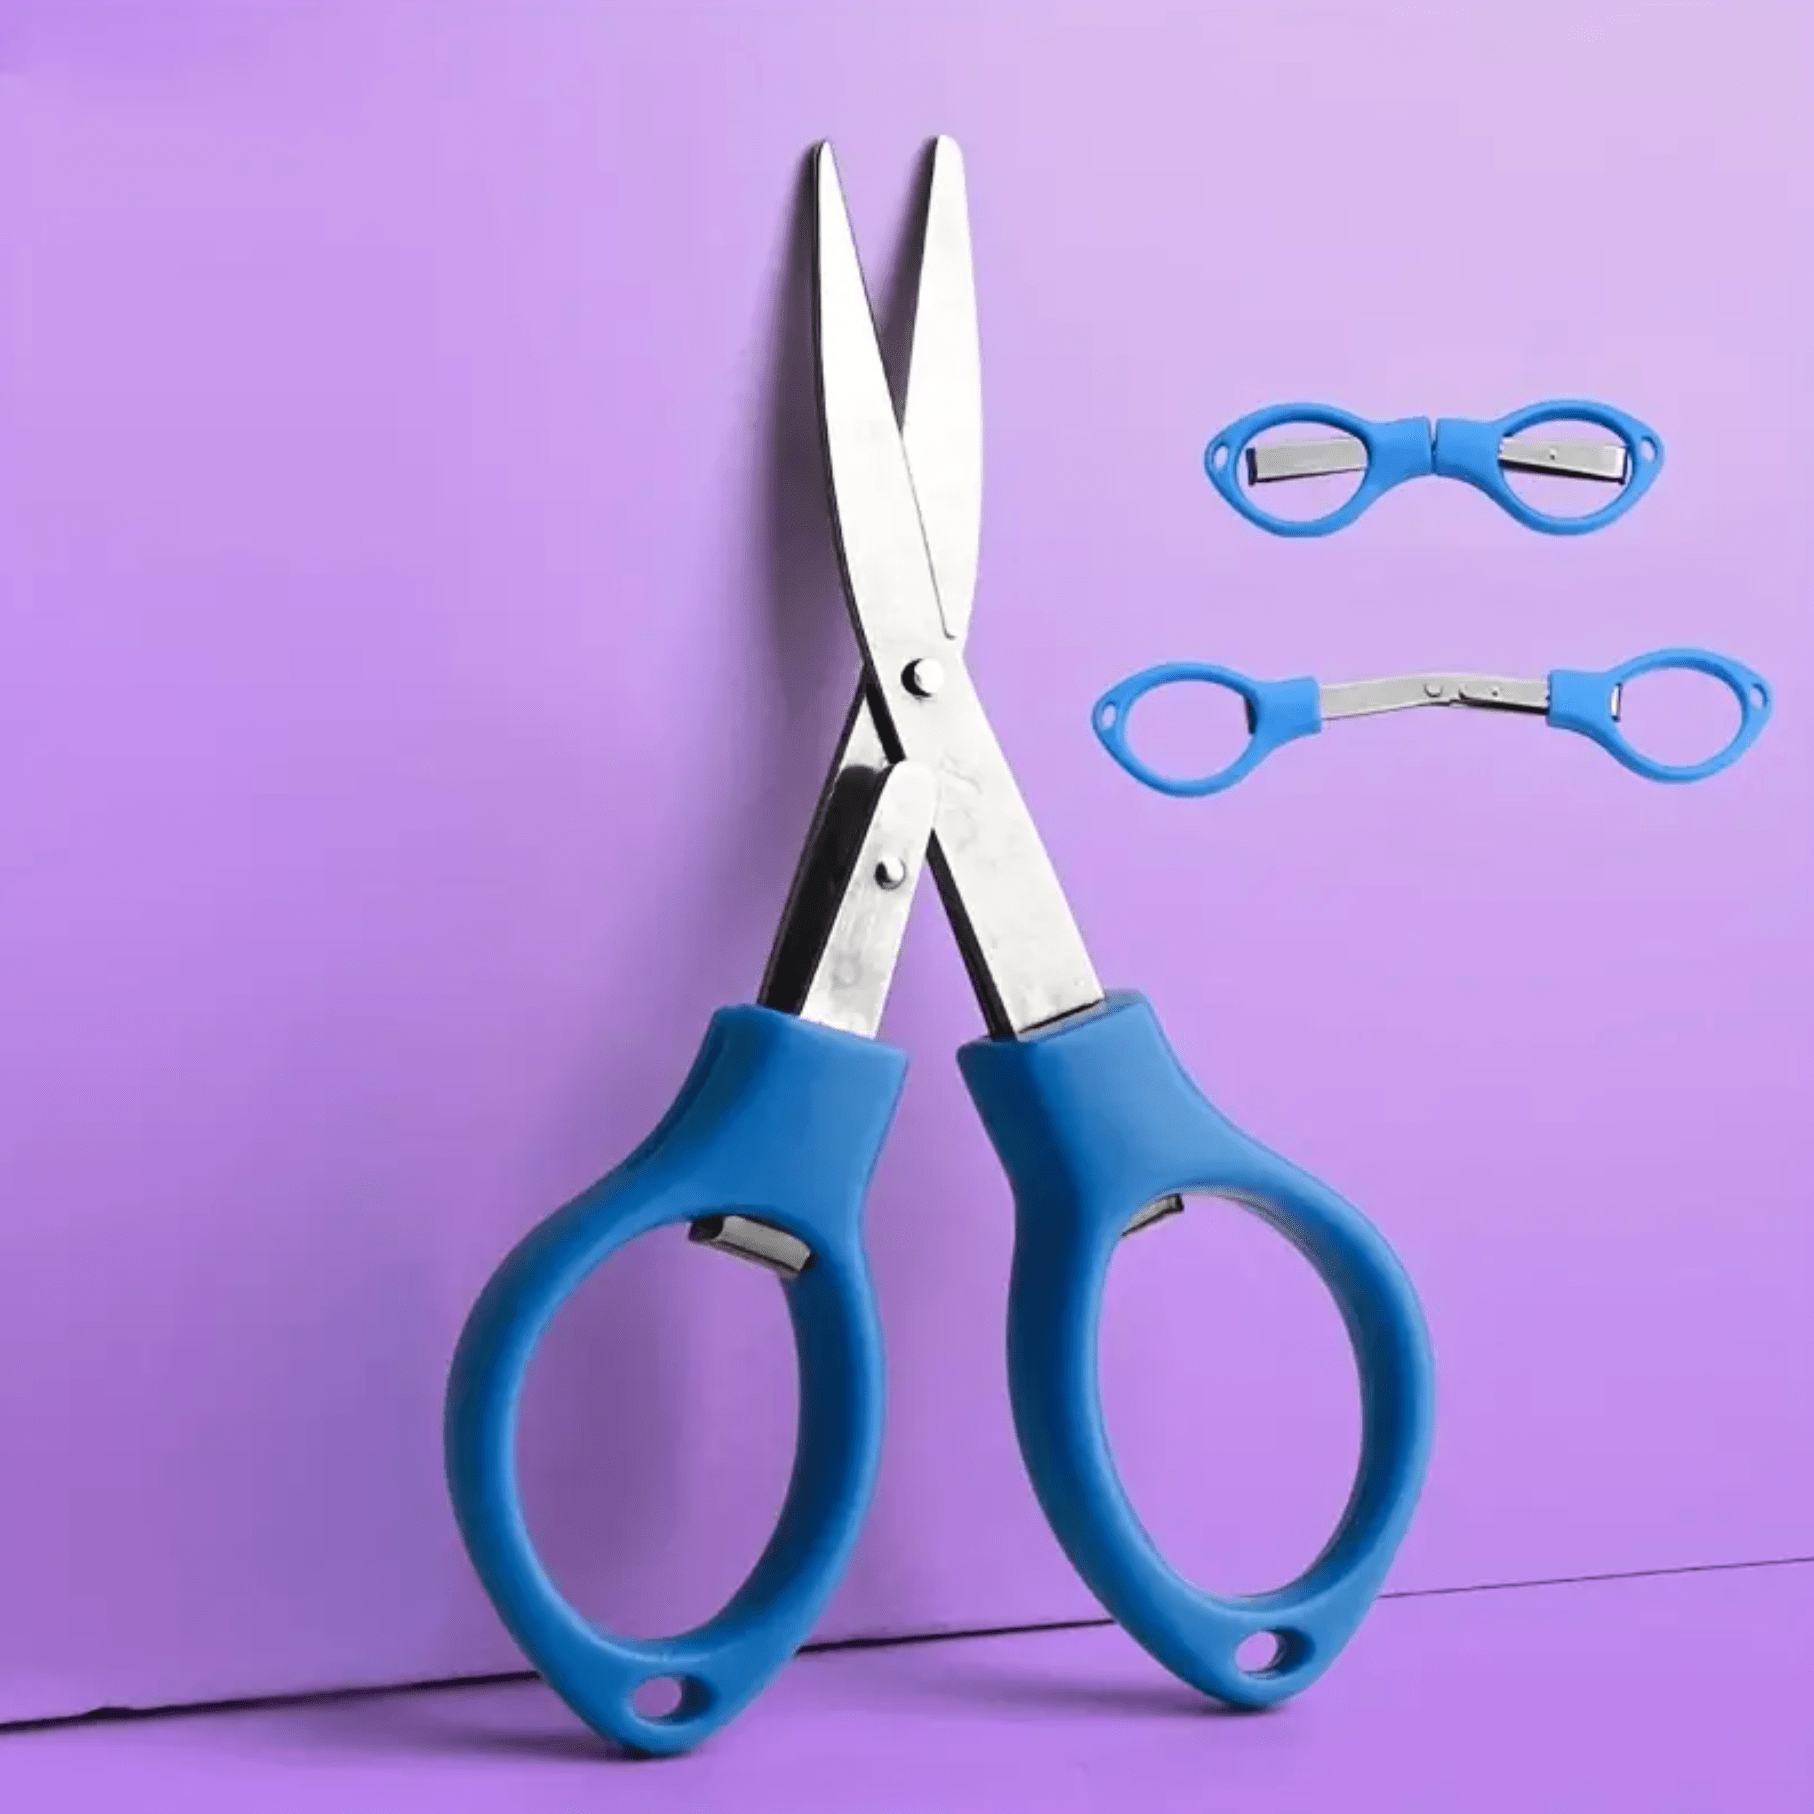 4" Stainless Steel Folding Scissors With Plastic Handle, Mini Beading Scissors, Basics Leather & Vinyl